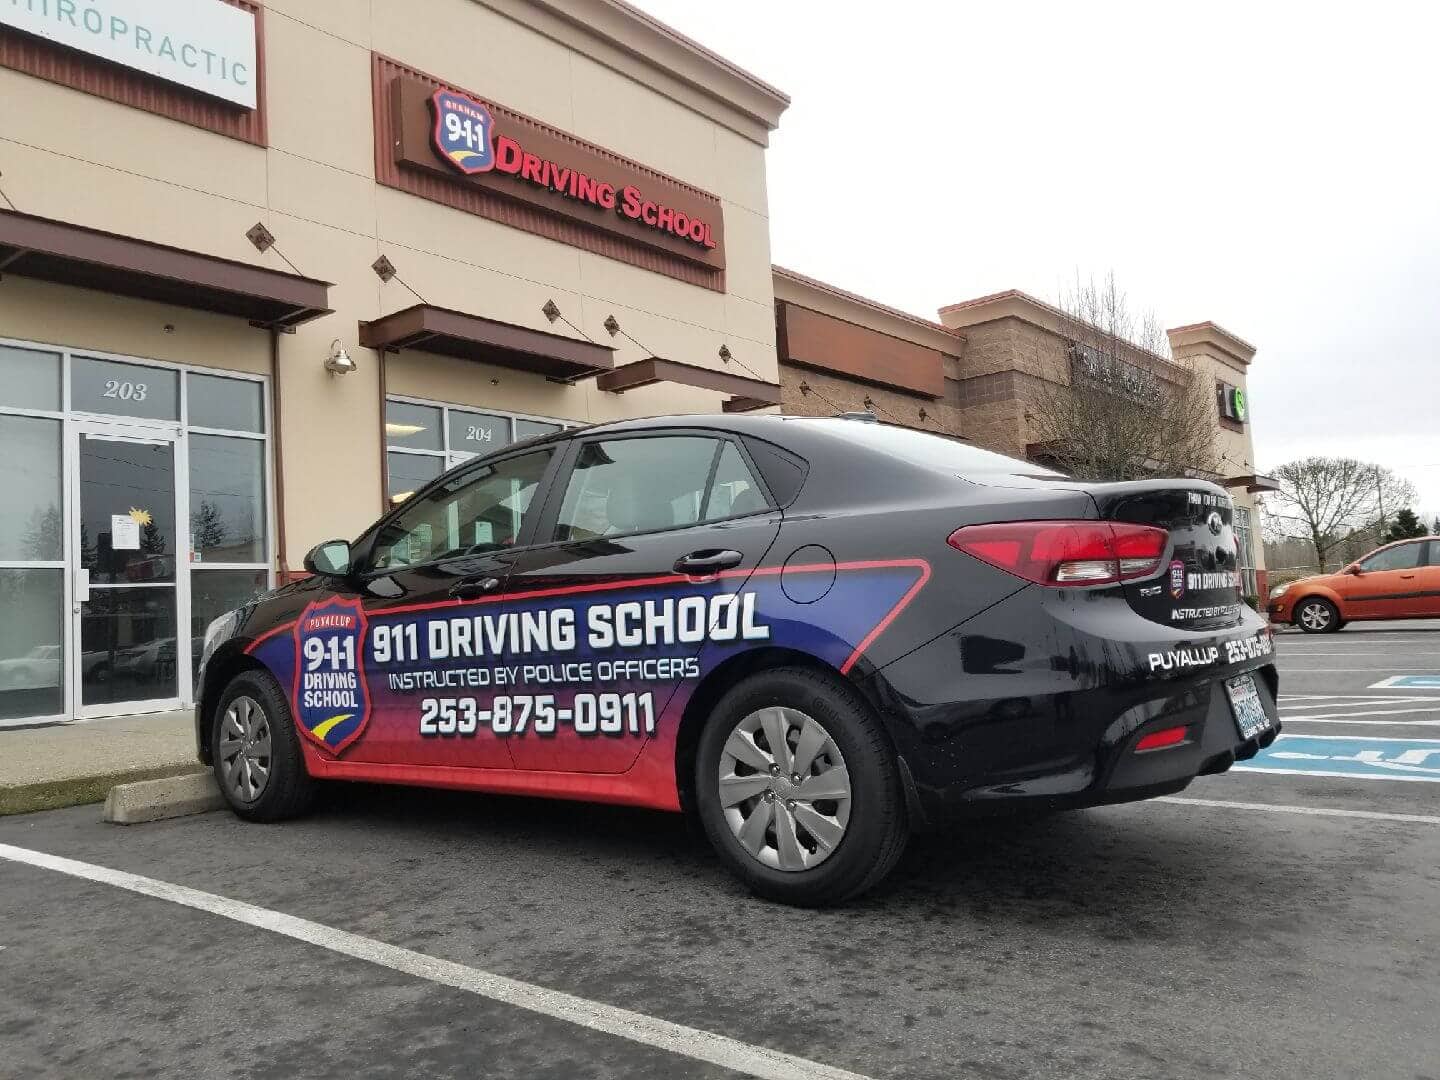 911 Driving School - Westminster, CO, US, traffic school